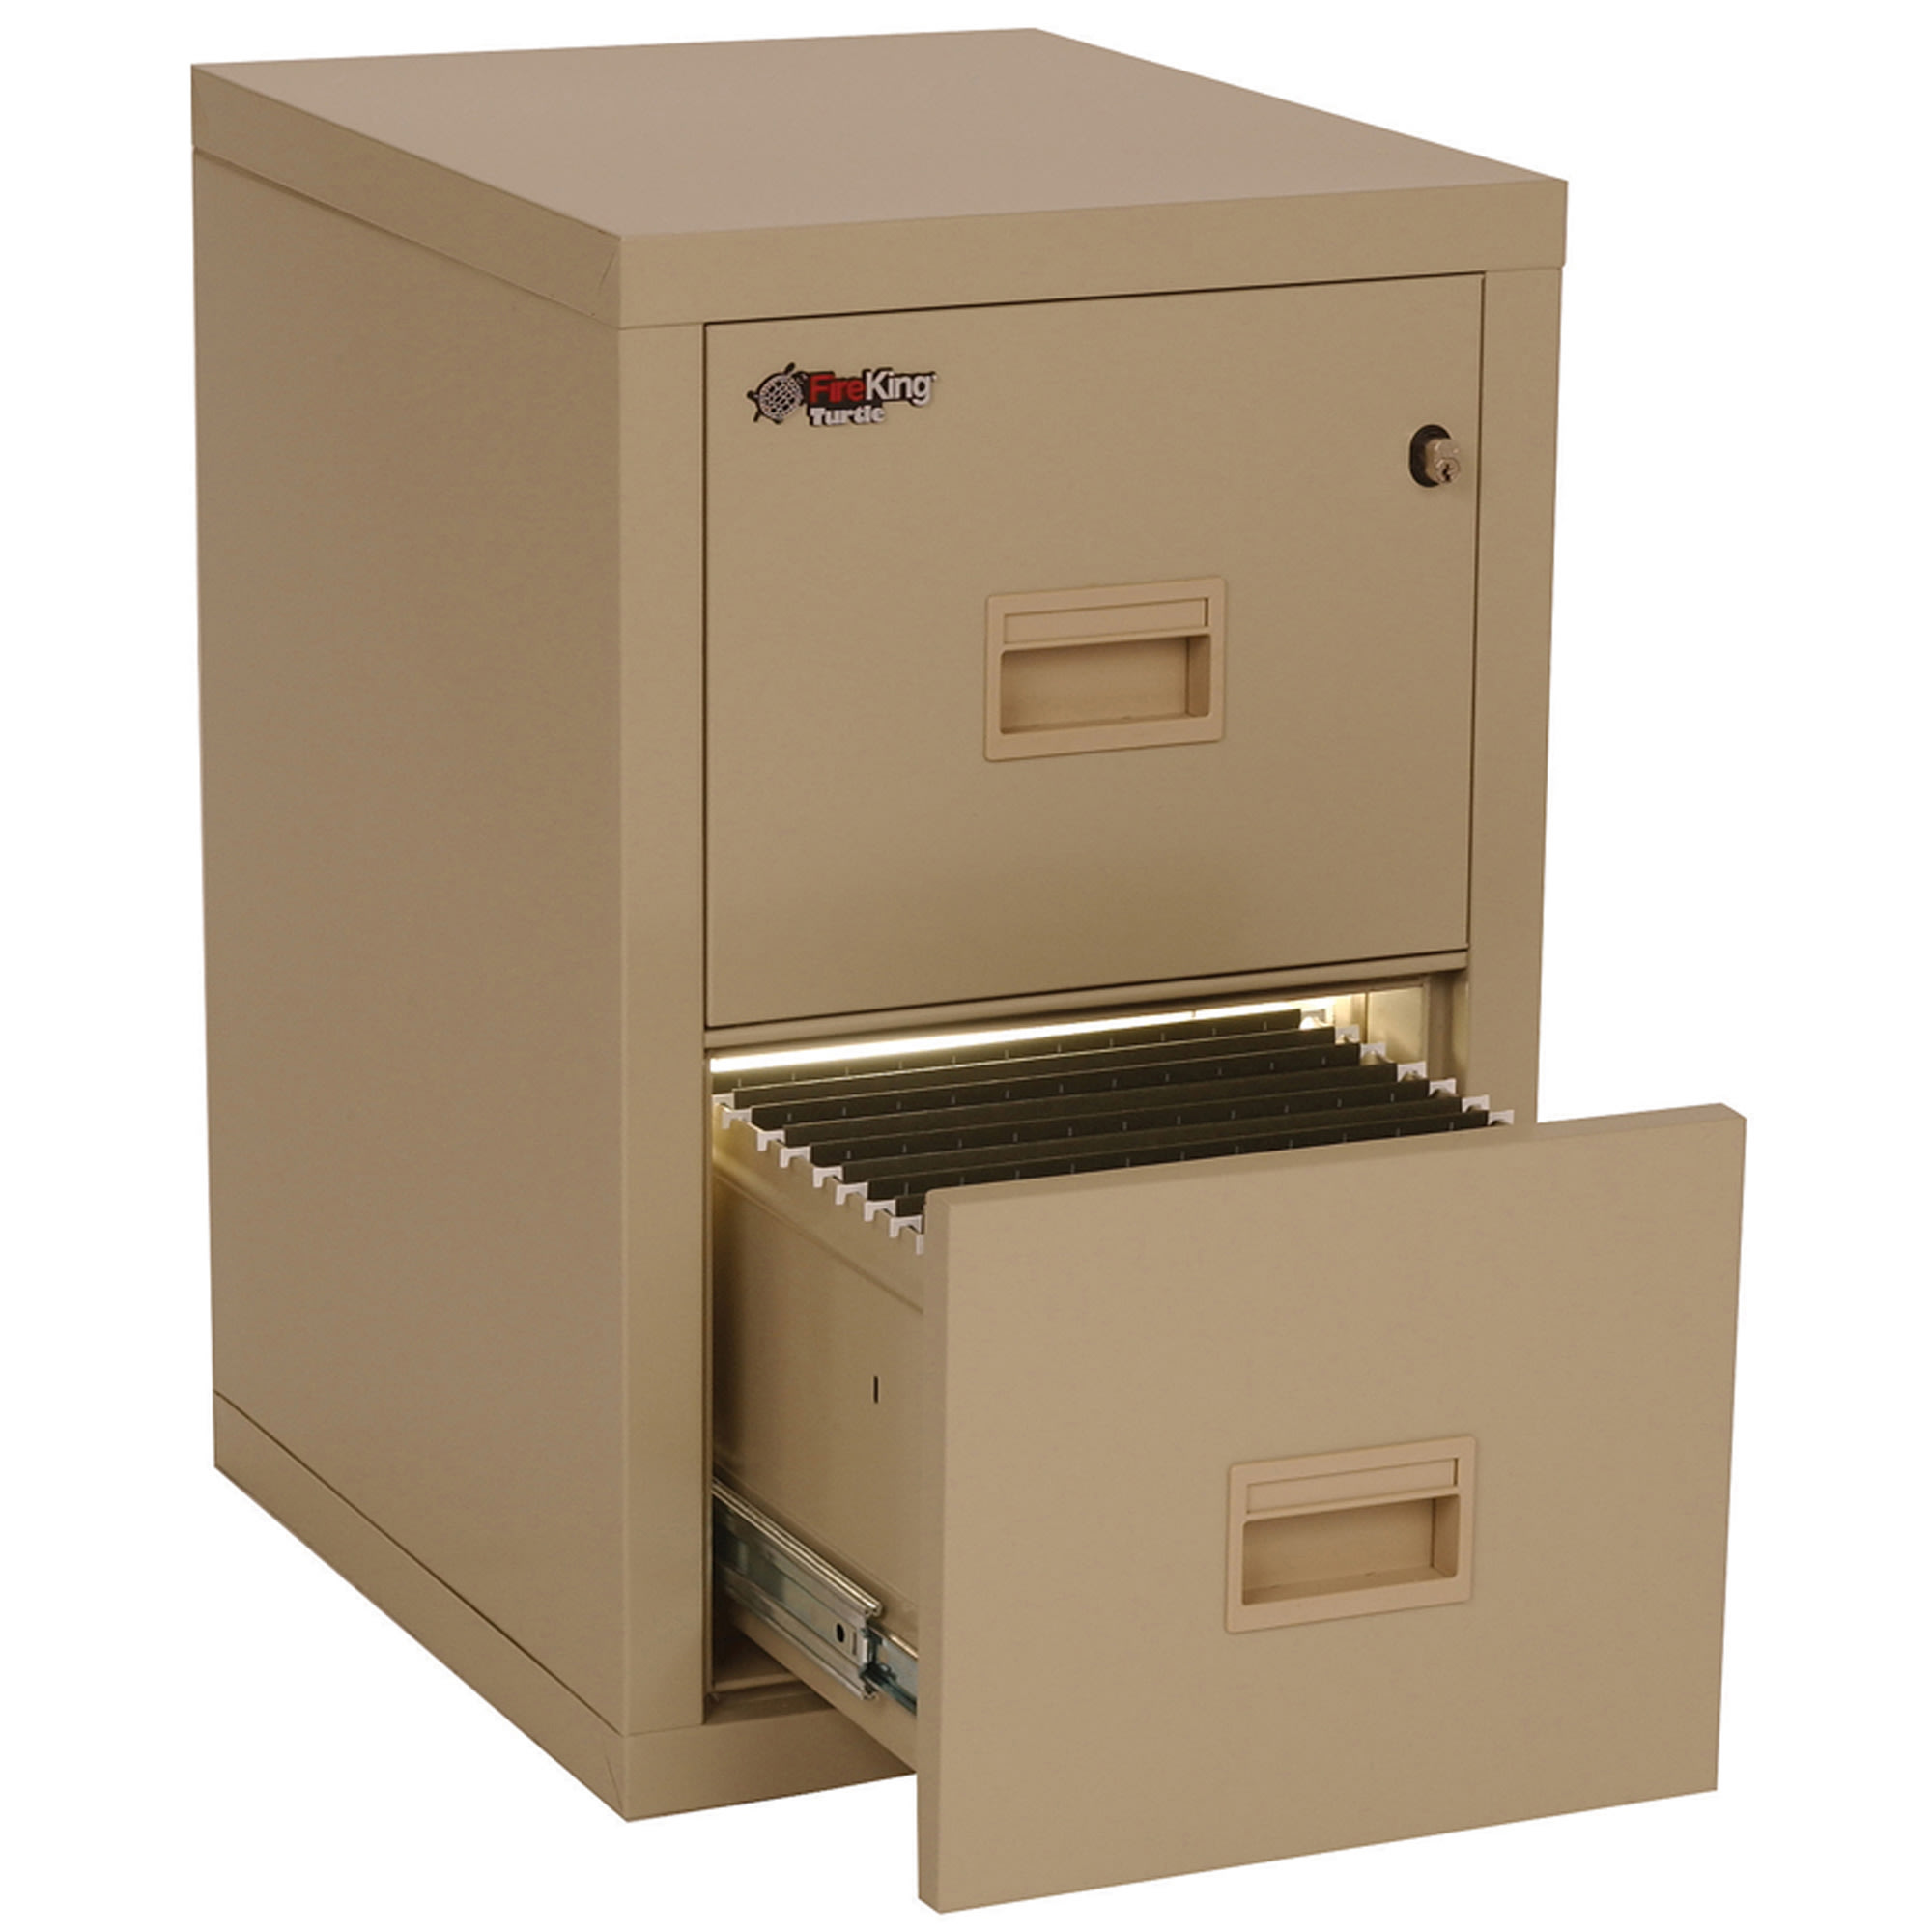 Fireking File Cabinets Replacement Keys | Cabinets Matttroy